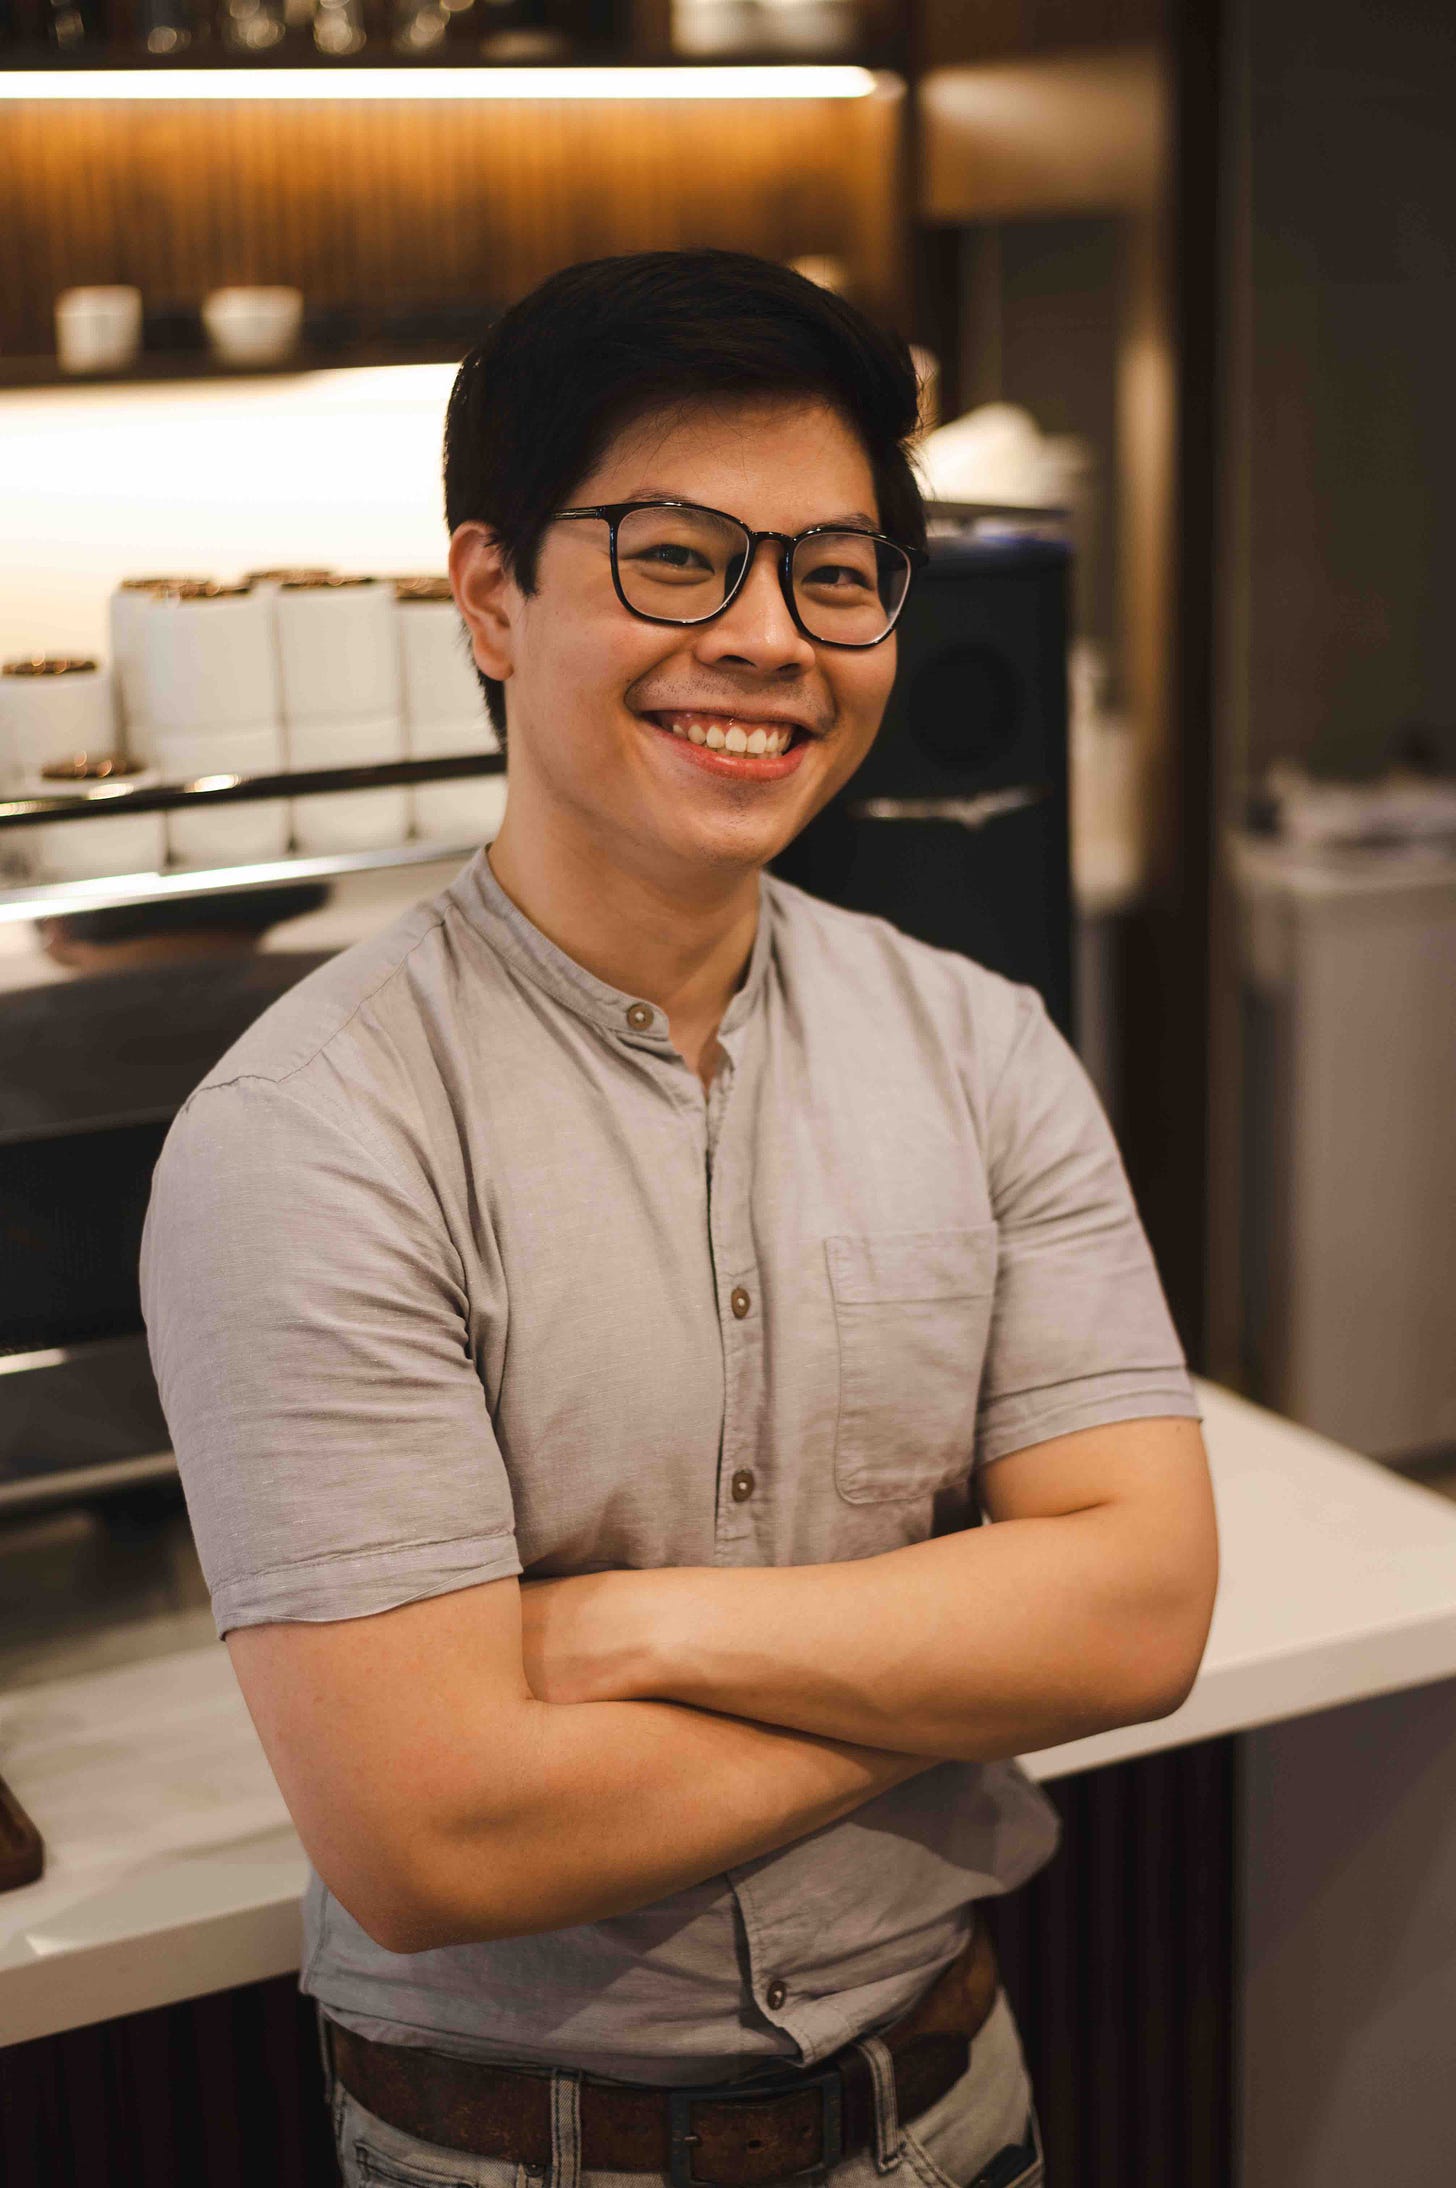 Nick Liu, Founder of FiftyFive Coffee Bar